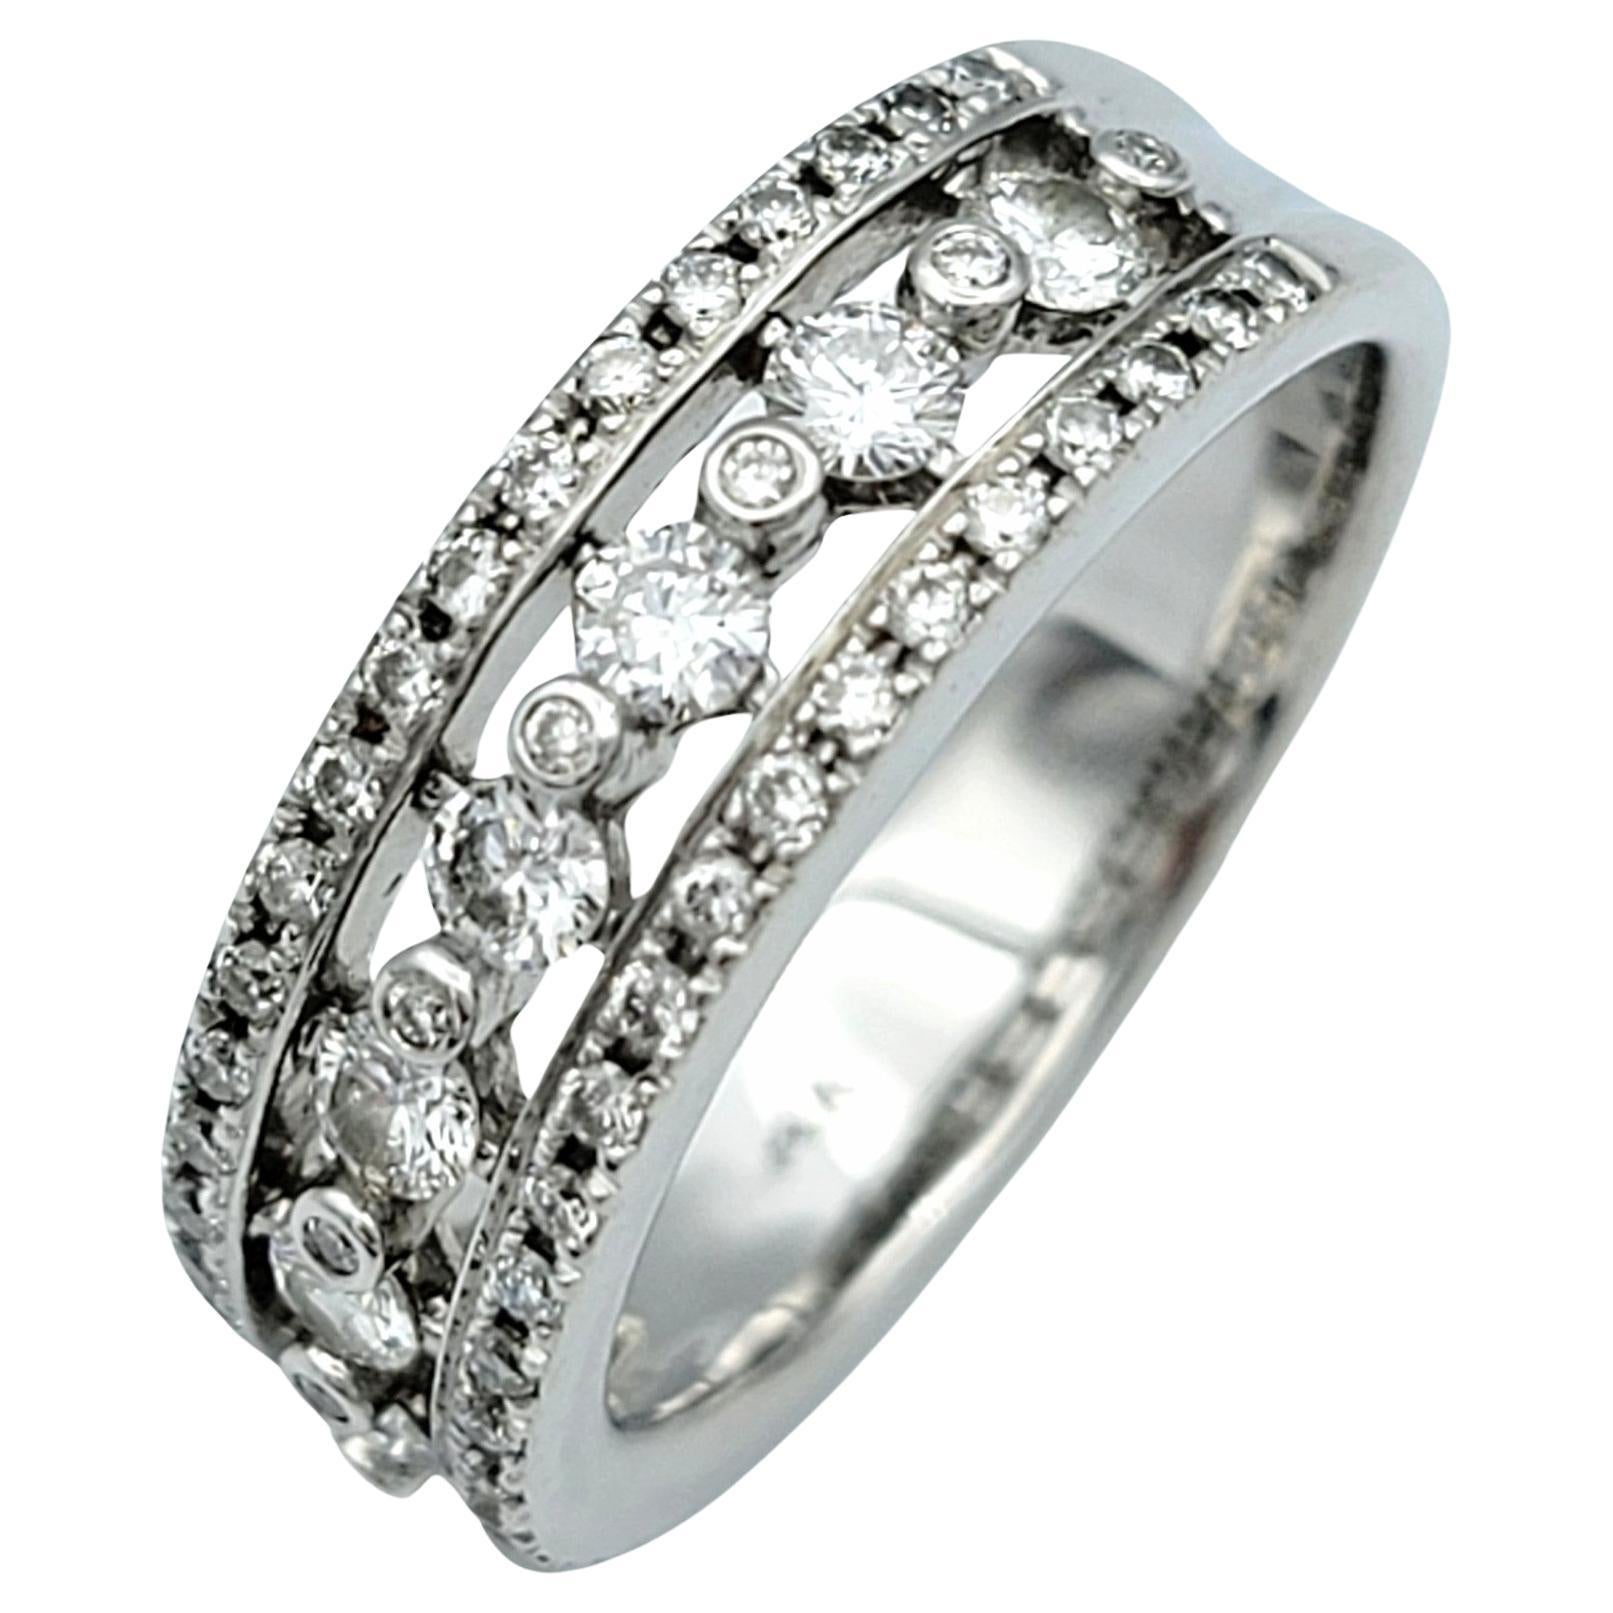 Multi-Row Round Diamond Band Ring Set in Polished 14 Karat White Gold For Sale